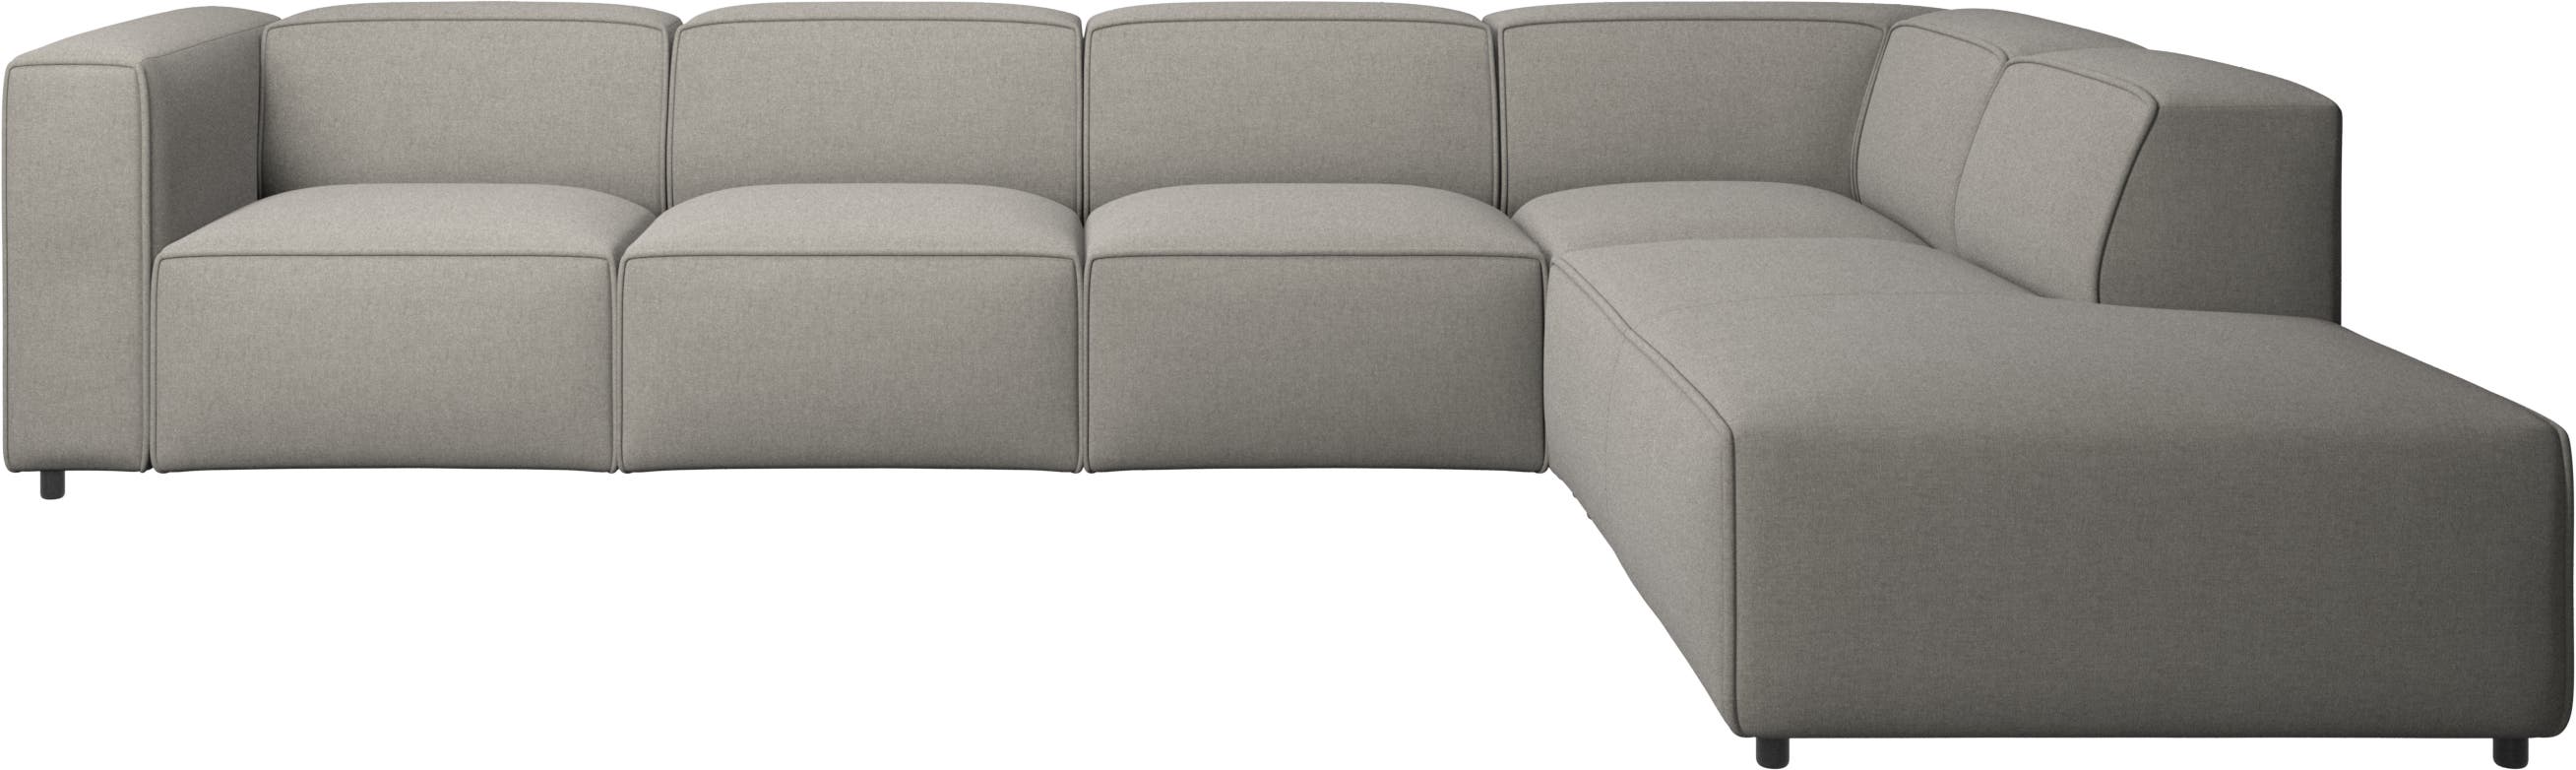 Carmo corner sofa